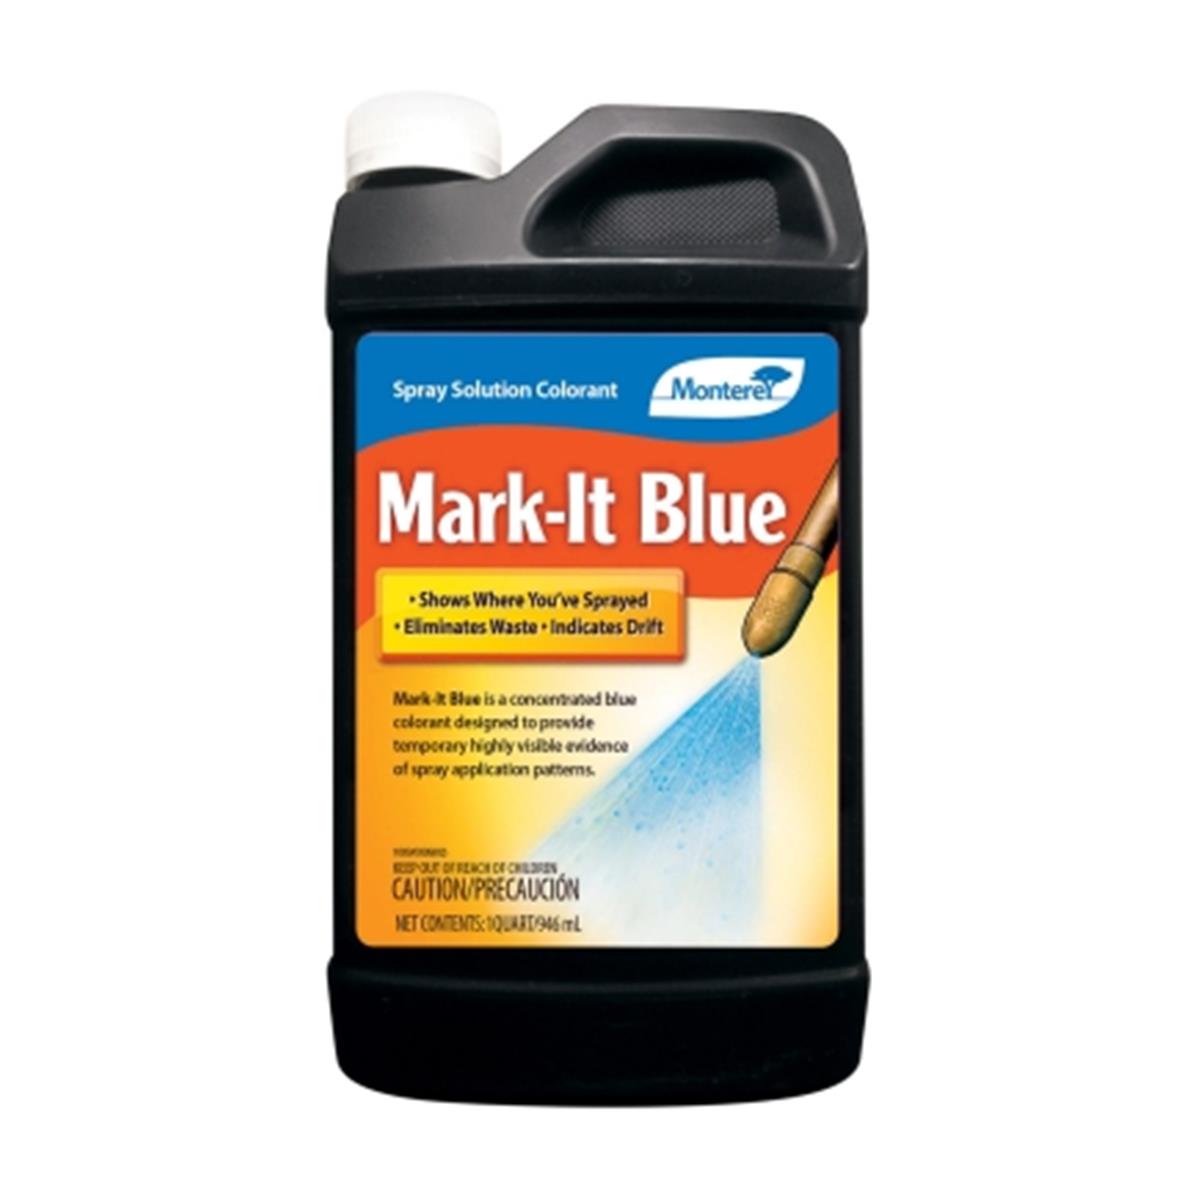 Lawn & Garden Products 7414881 32 Oz Monterey Colorant Spray Solution Blue